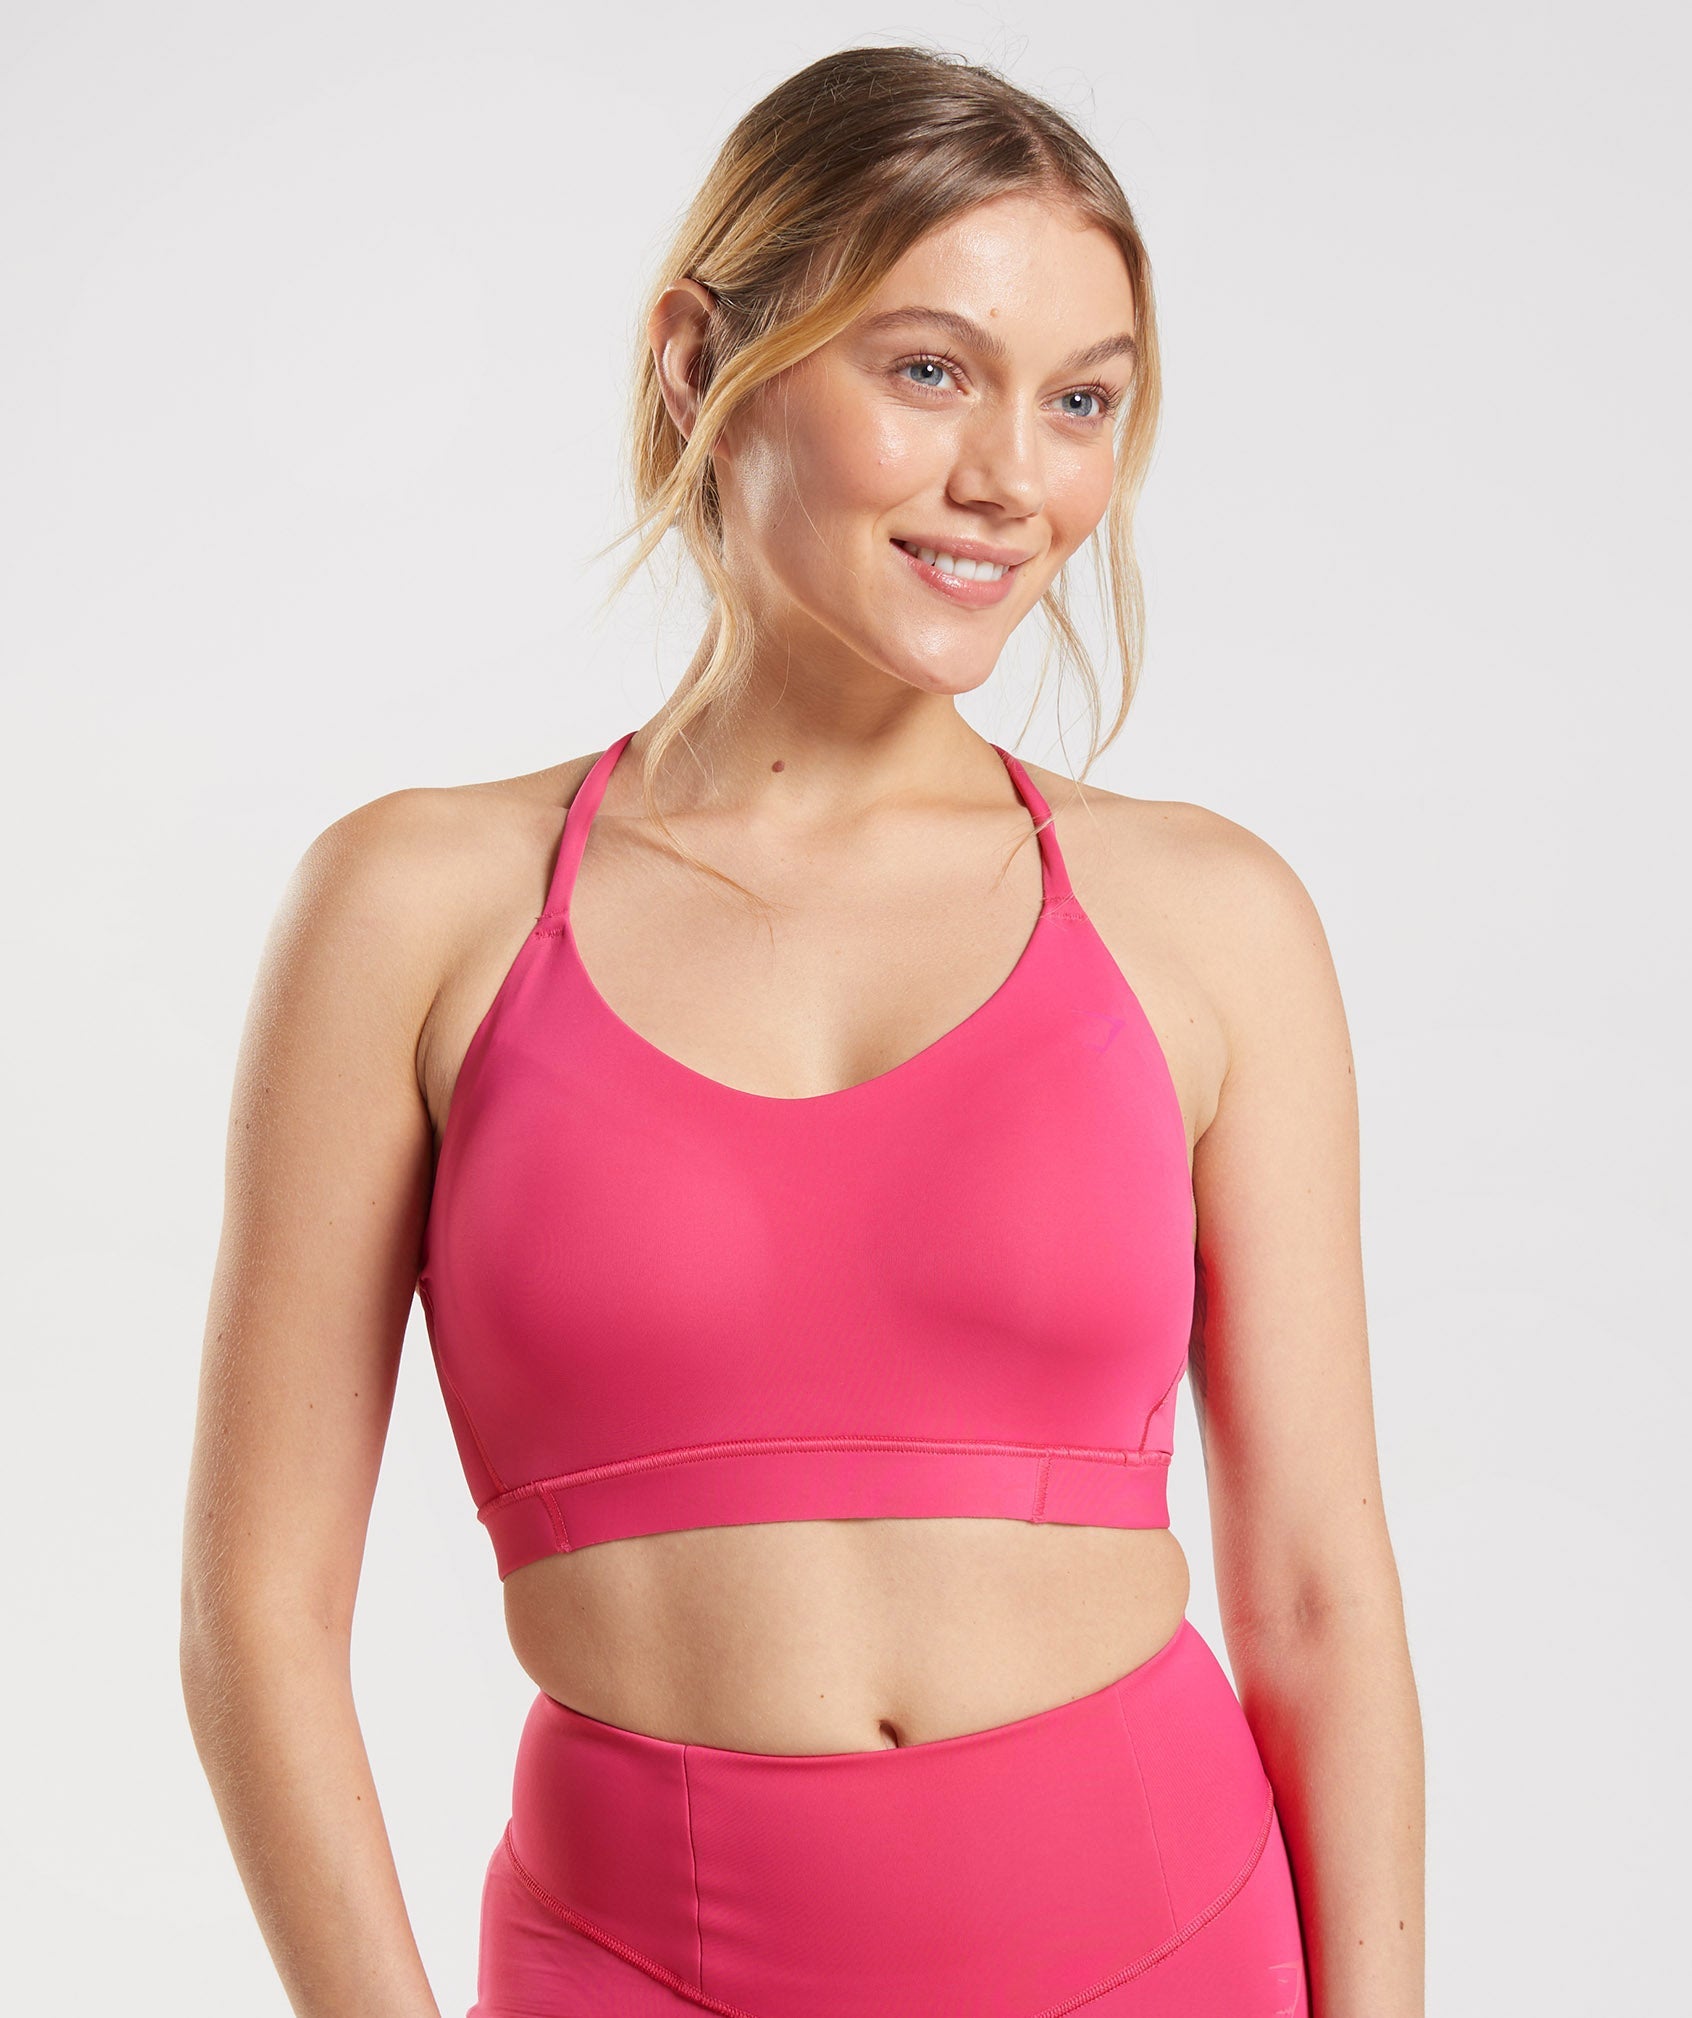 Victoria Sport Graphic Pink Sports Bra Size XL (38D) - 40% off